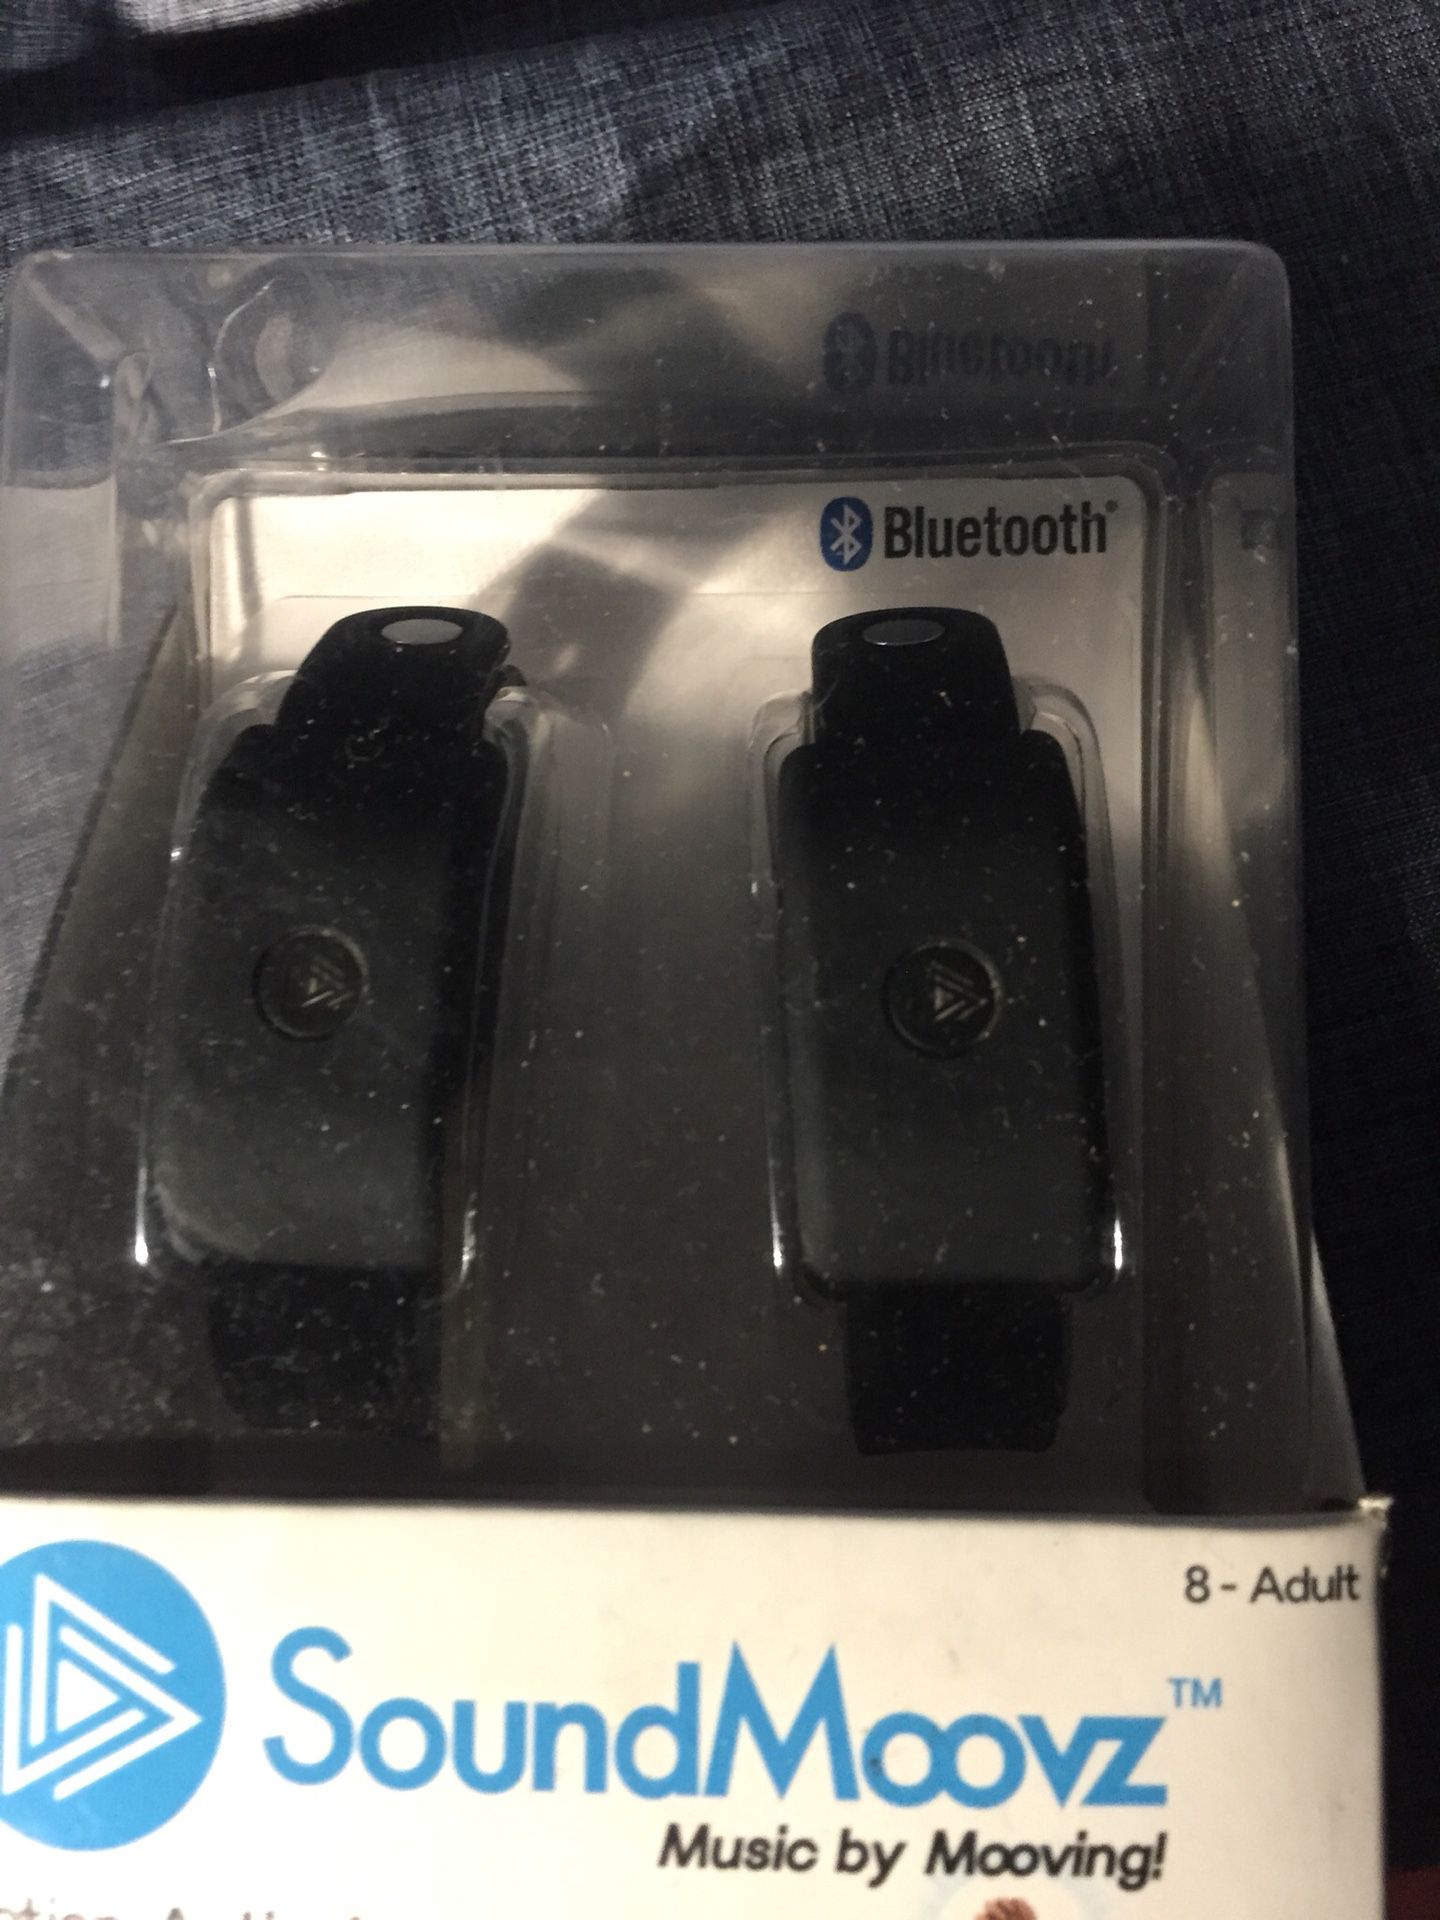 Bluetooth Wristbands